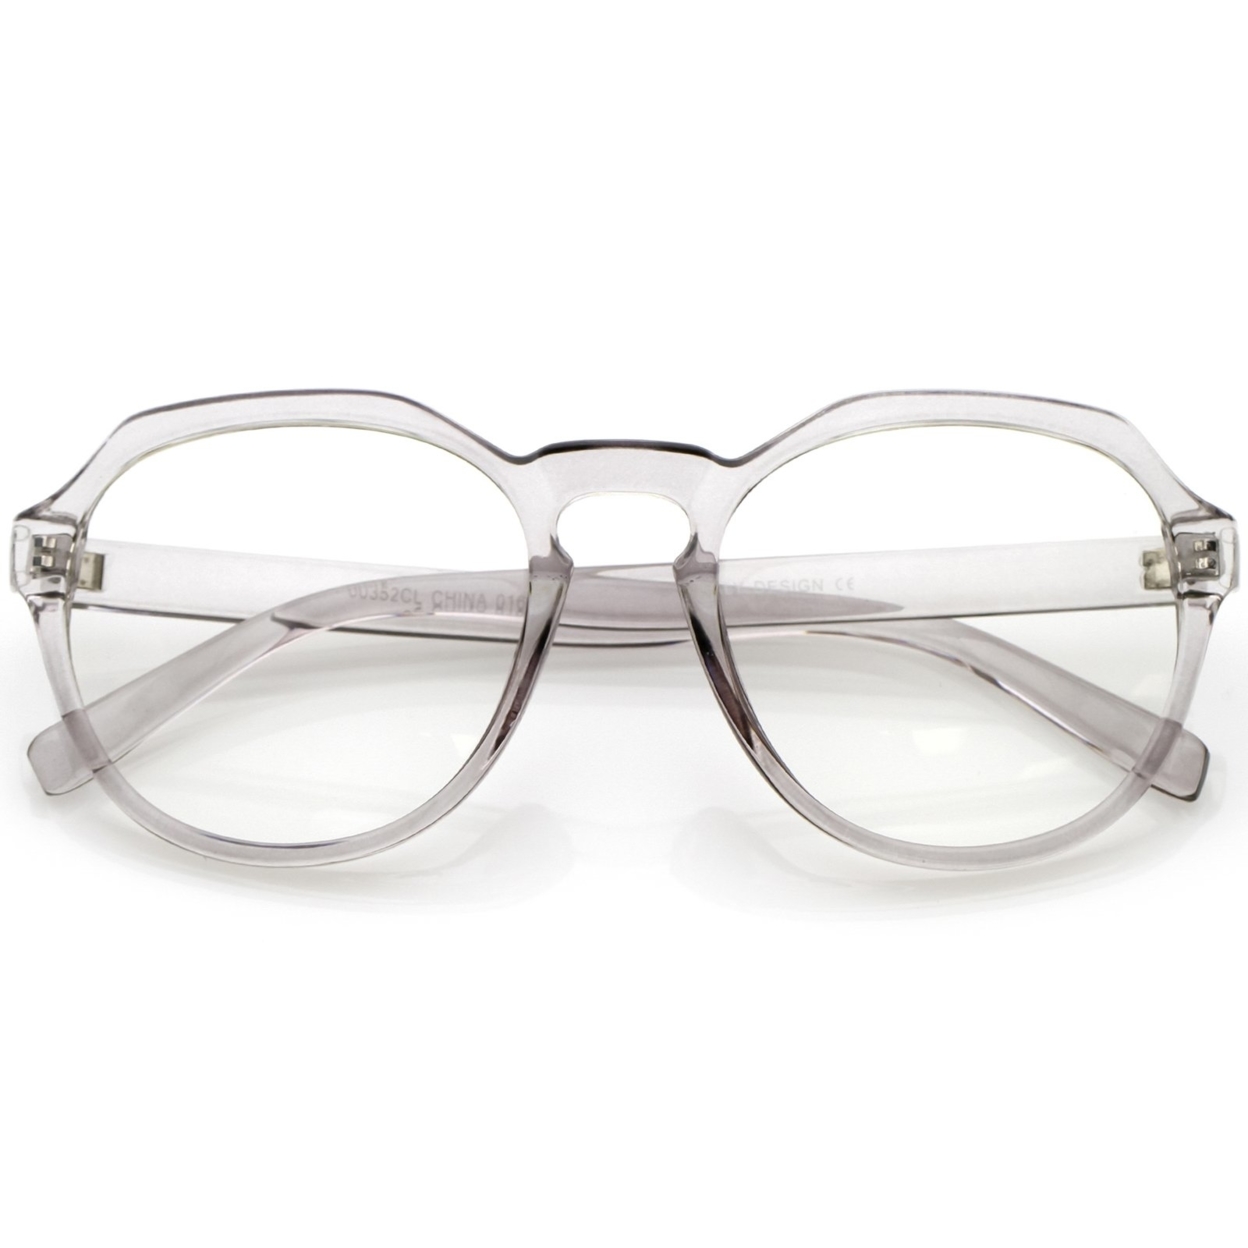 Modern Keyhole Nose Bridge Clear Lens Round Eyeglasses 55mm - Tortoise / Clear